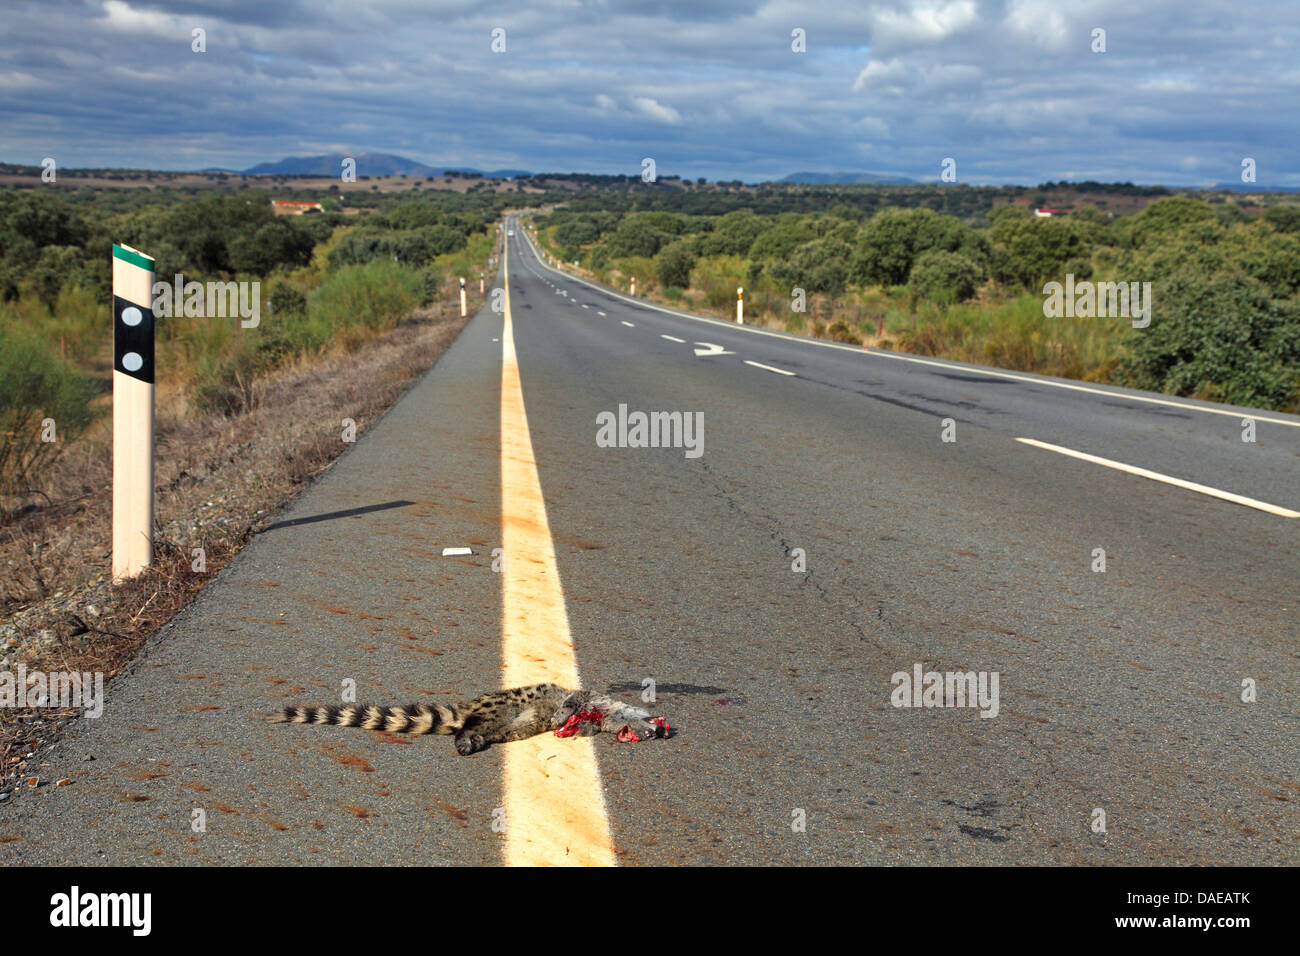 small-spotted genet (Genetta genetta), roadkill at the roadside, Spain, Extremadura Stock Photo